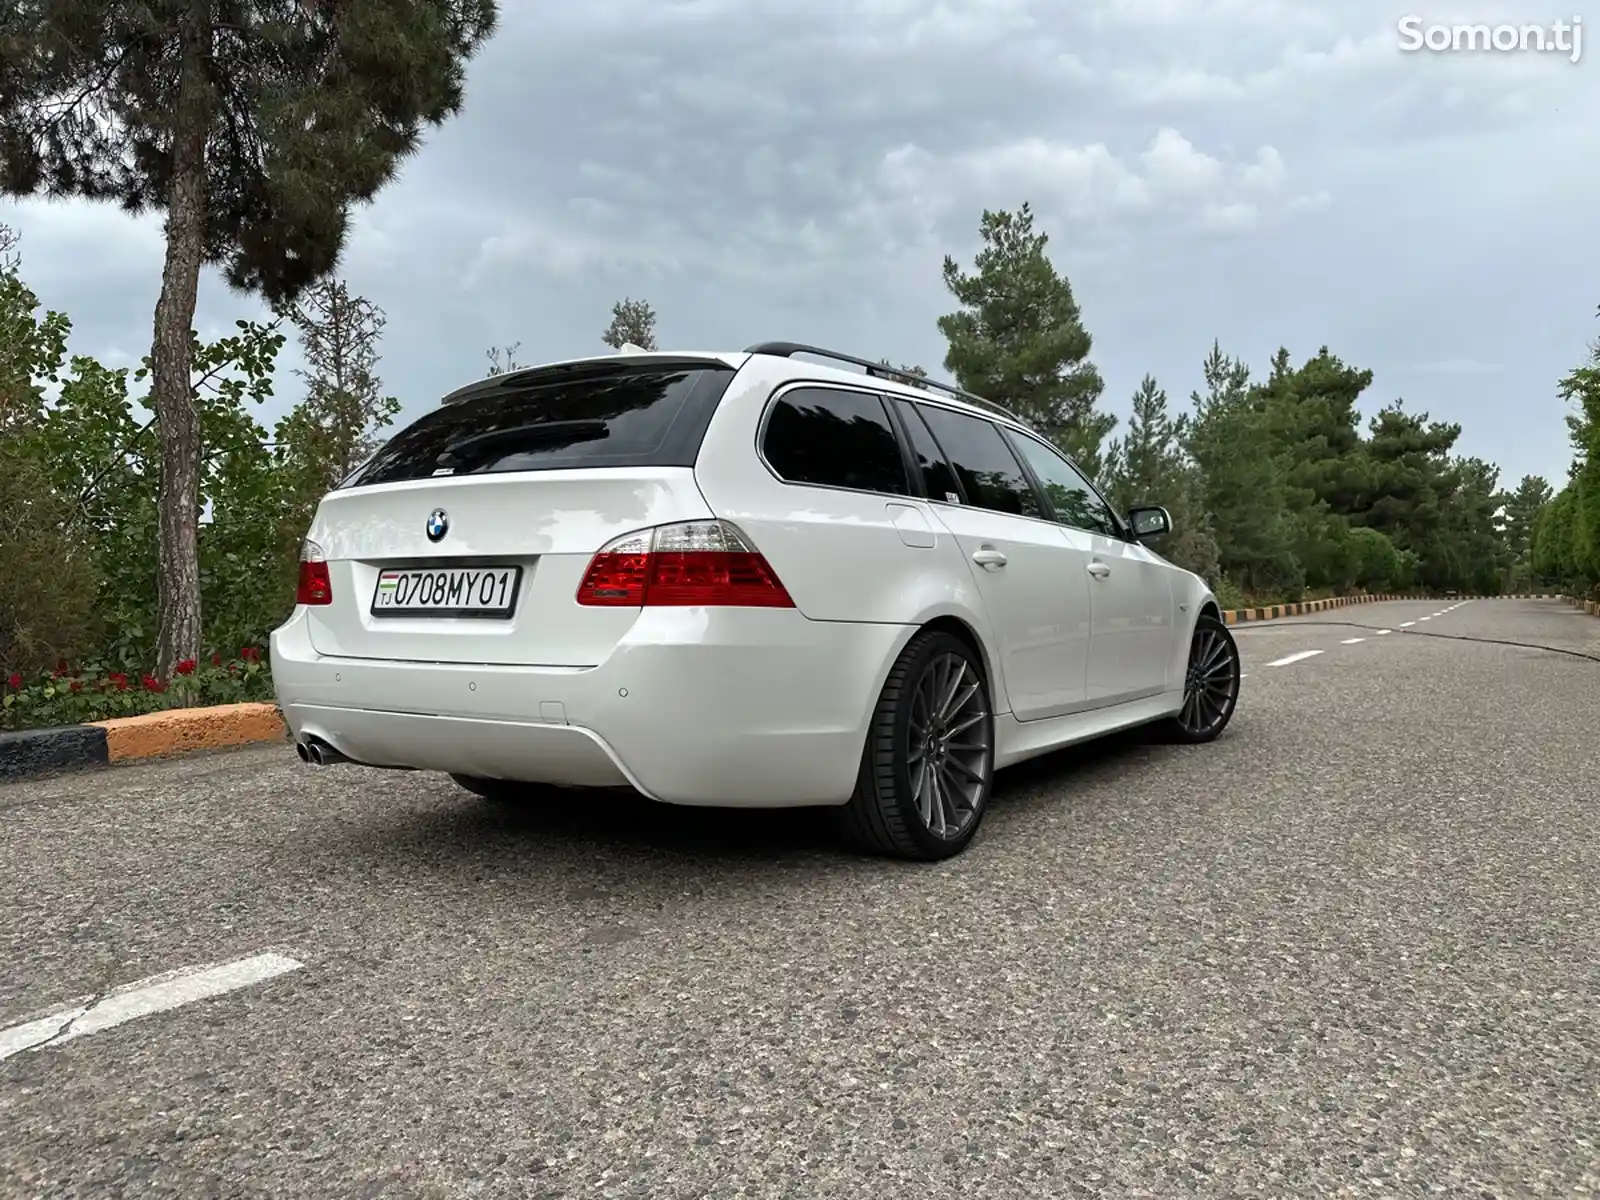 BMW 5 series, 2008-2